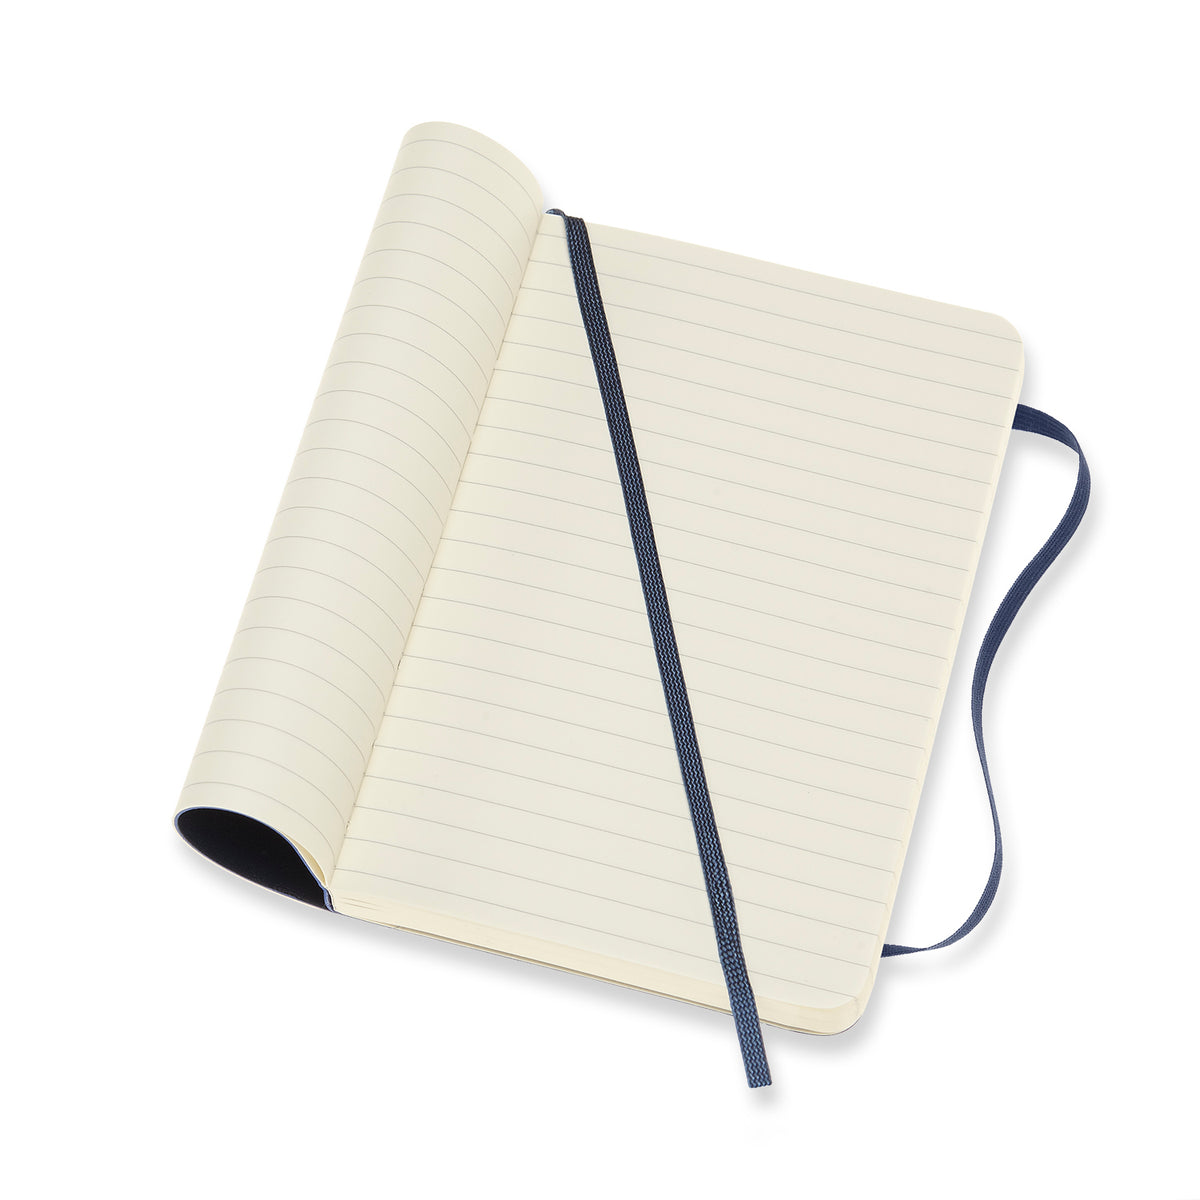 Moleskine - Classic Soft Cover Notebook - Ruled - Pocket - Sapphire Blue